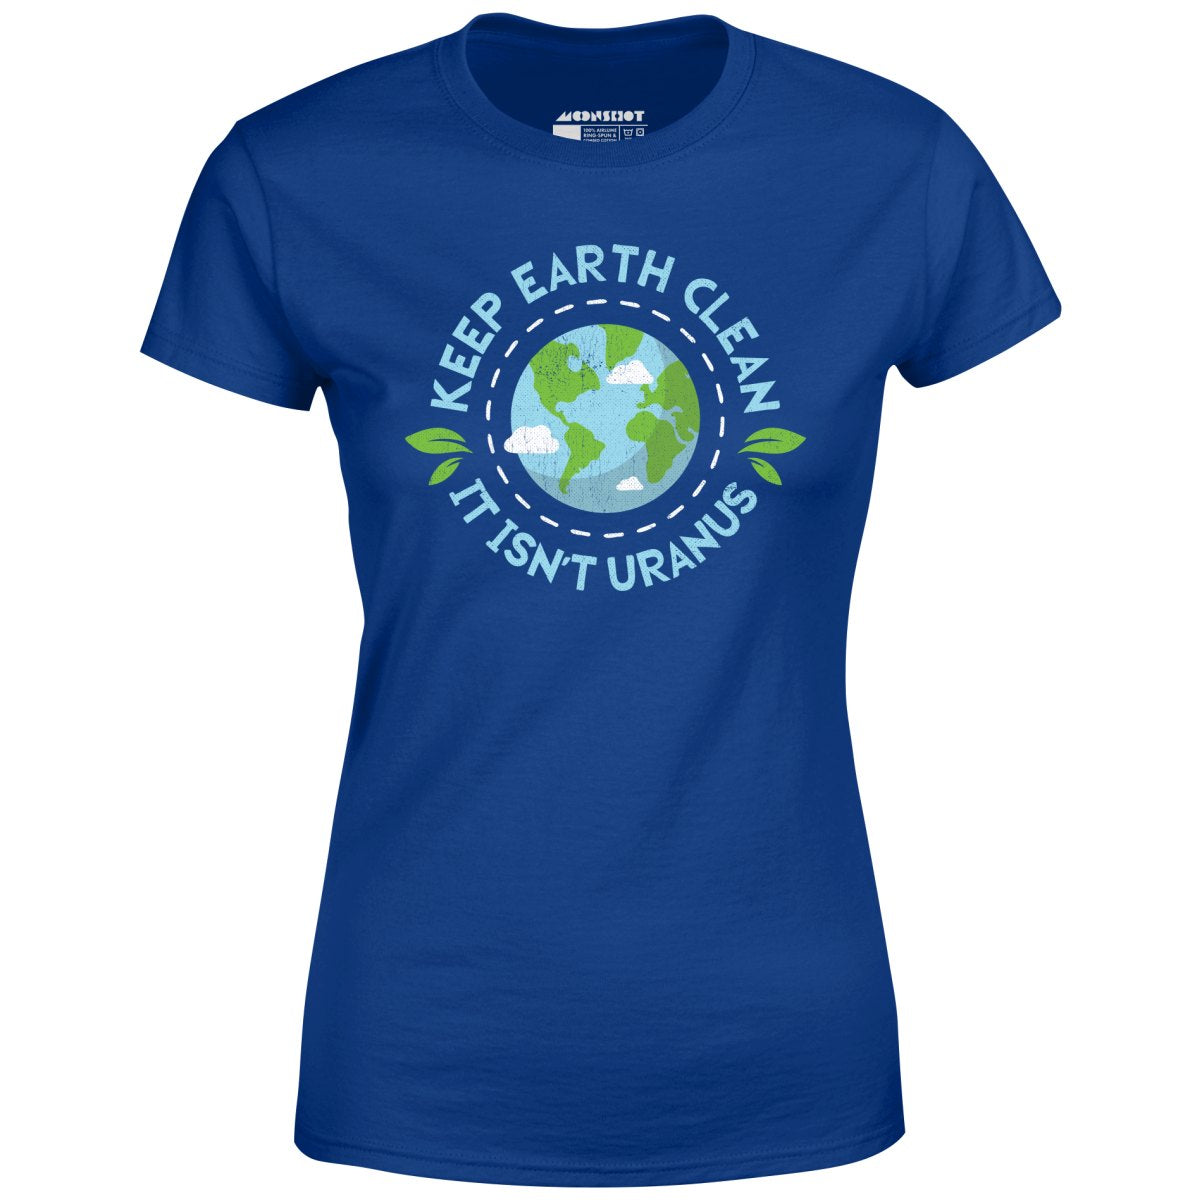 Keep Earth Clean It Isn't Uranus - Women's T-Shirt